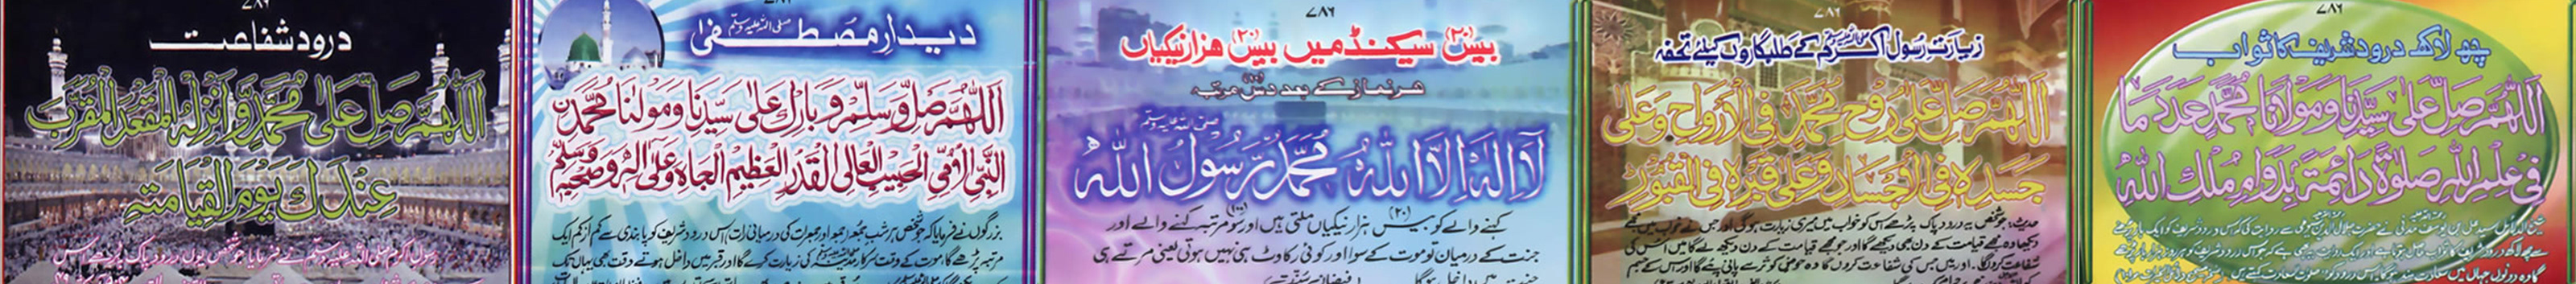 Faisal Iqbal vfx's profile banner